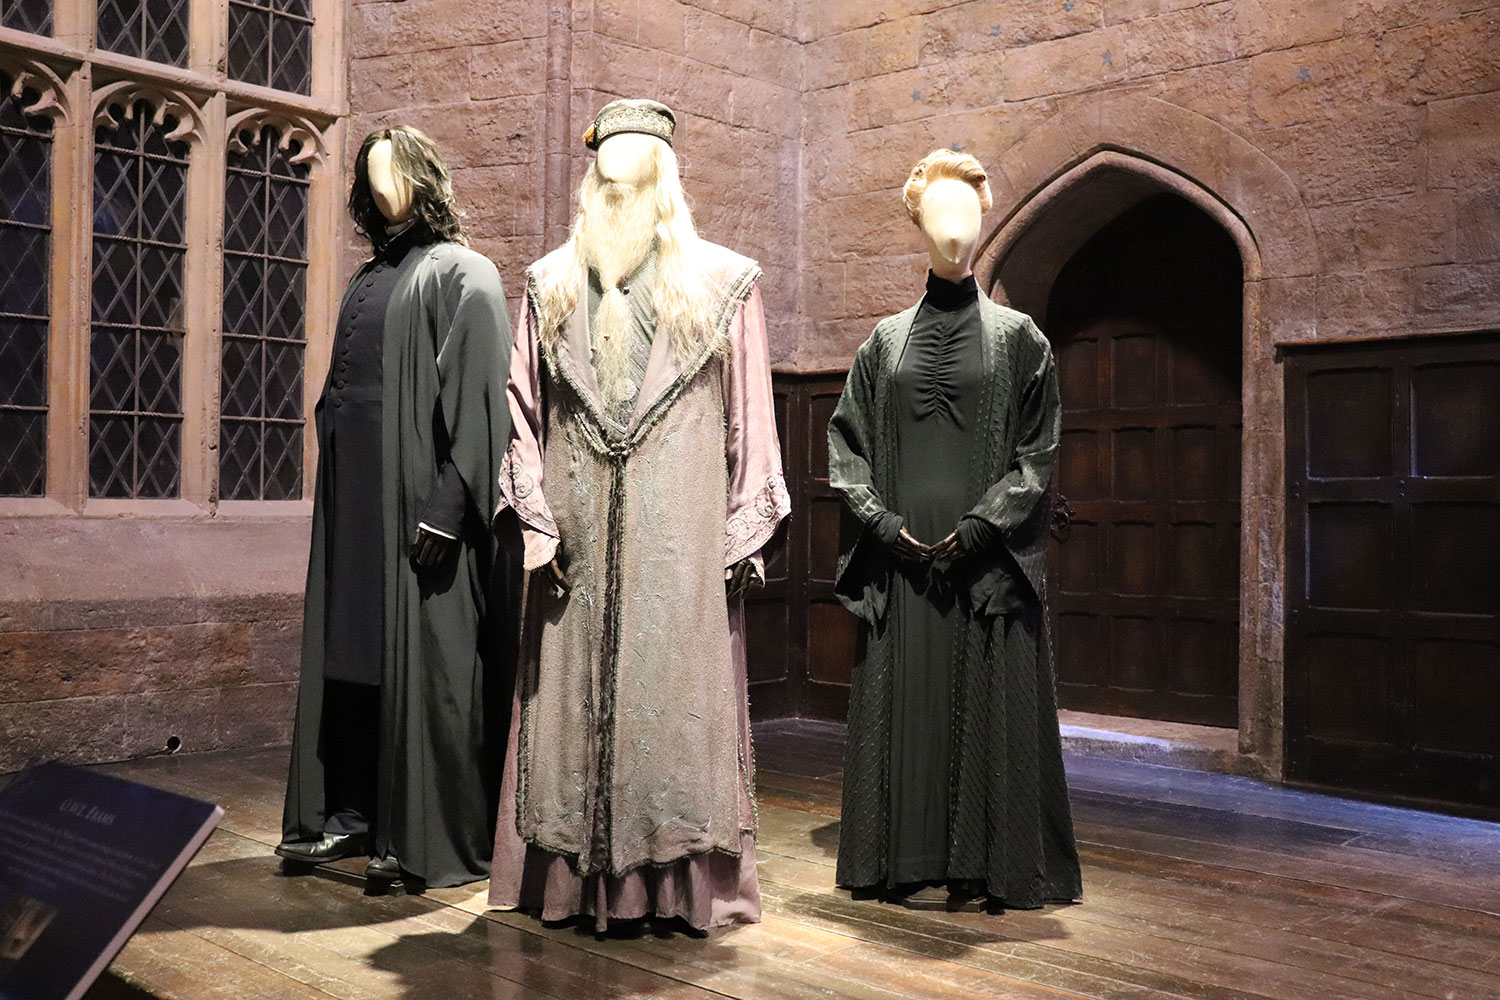 Professor Costumes, Harry Potter Studio Tour